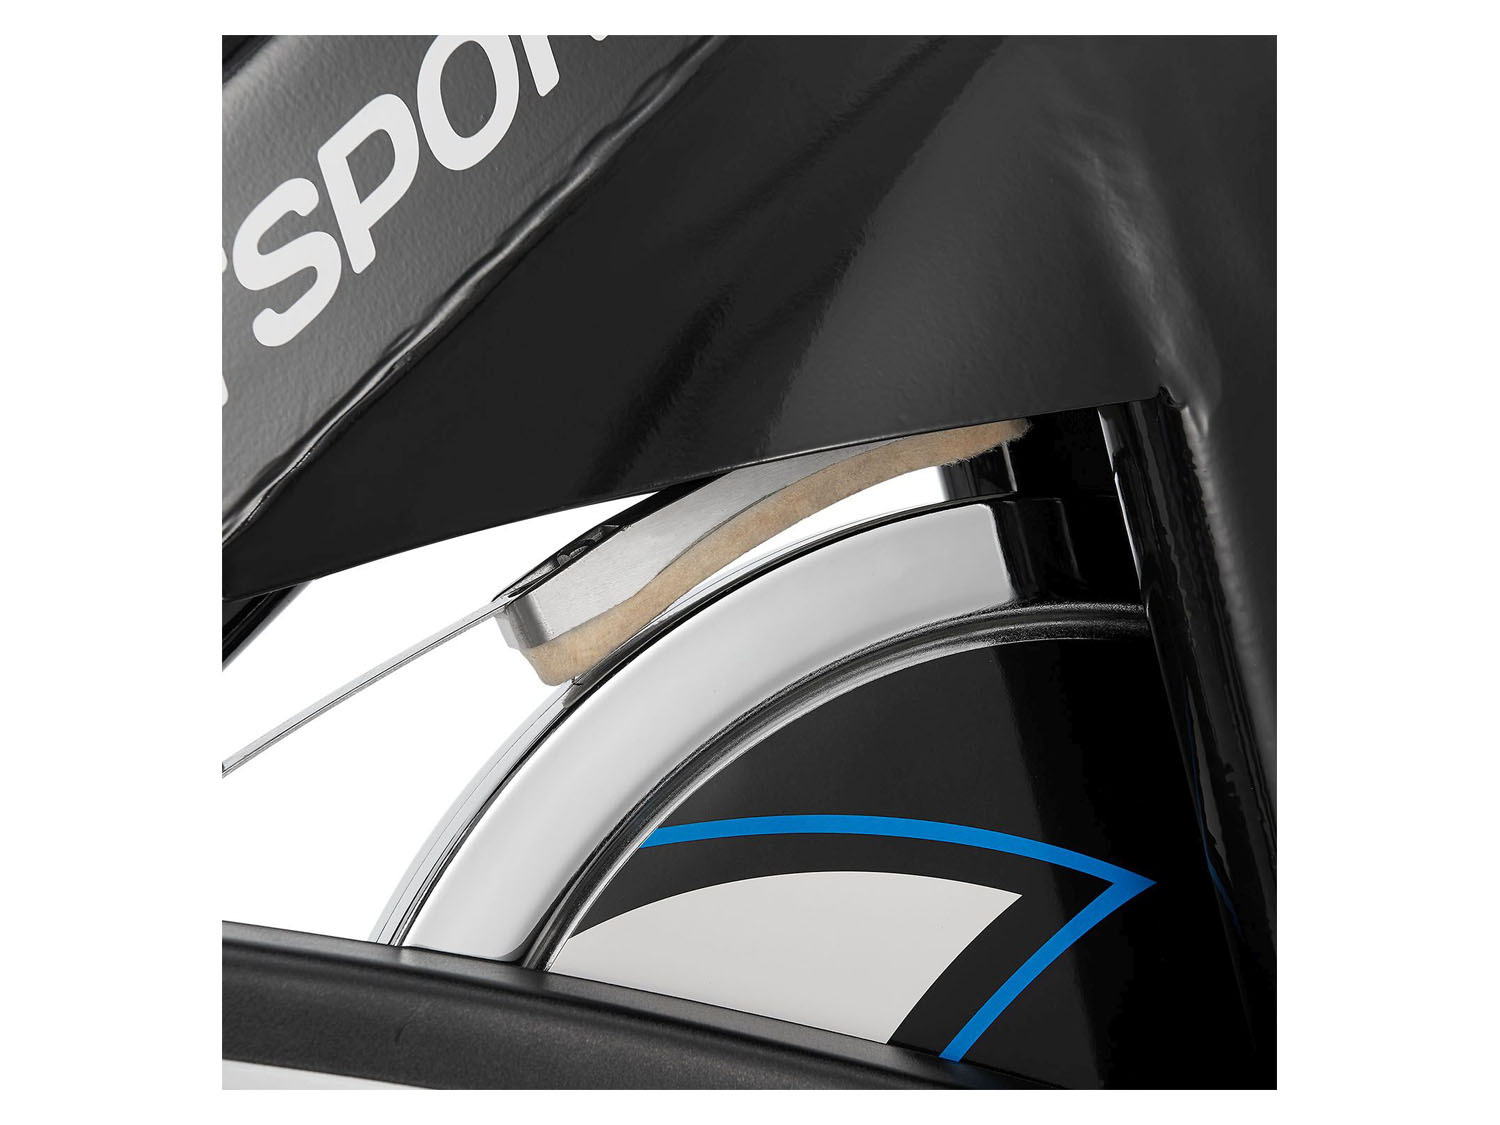 ArtSport Speedbike Premium, mit Display | LIDL